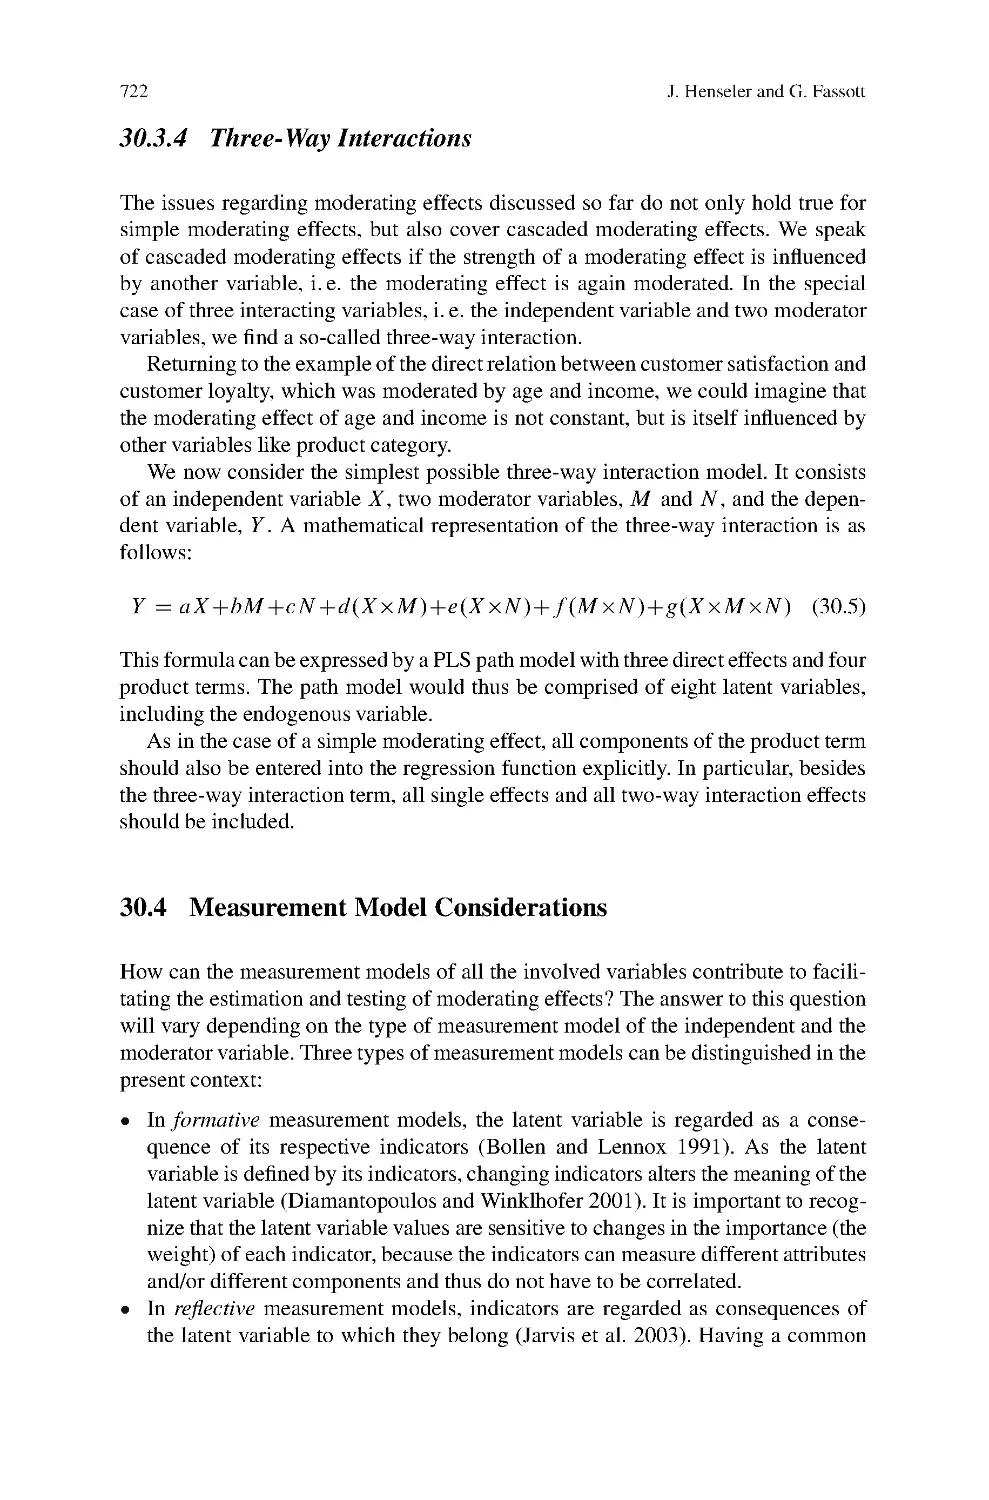 30.3.4 Three-Way Interactions
30.4 Measurement Model Considerations